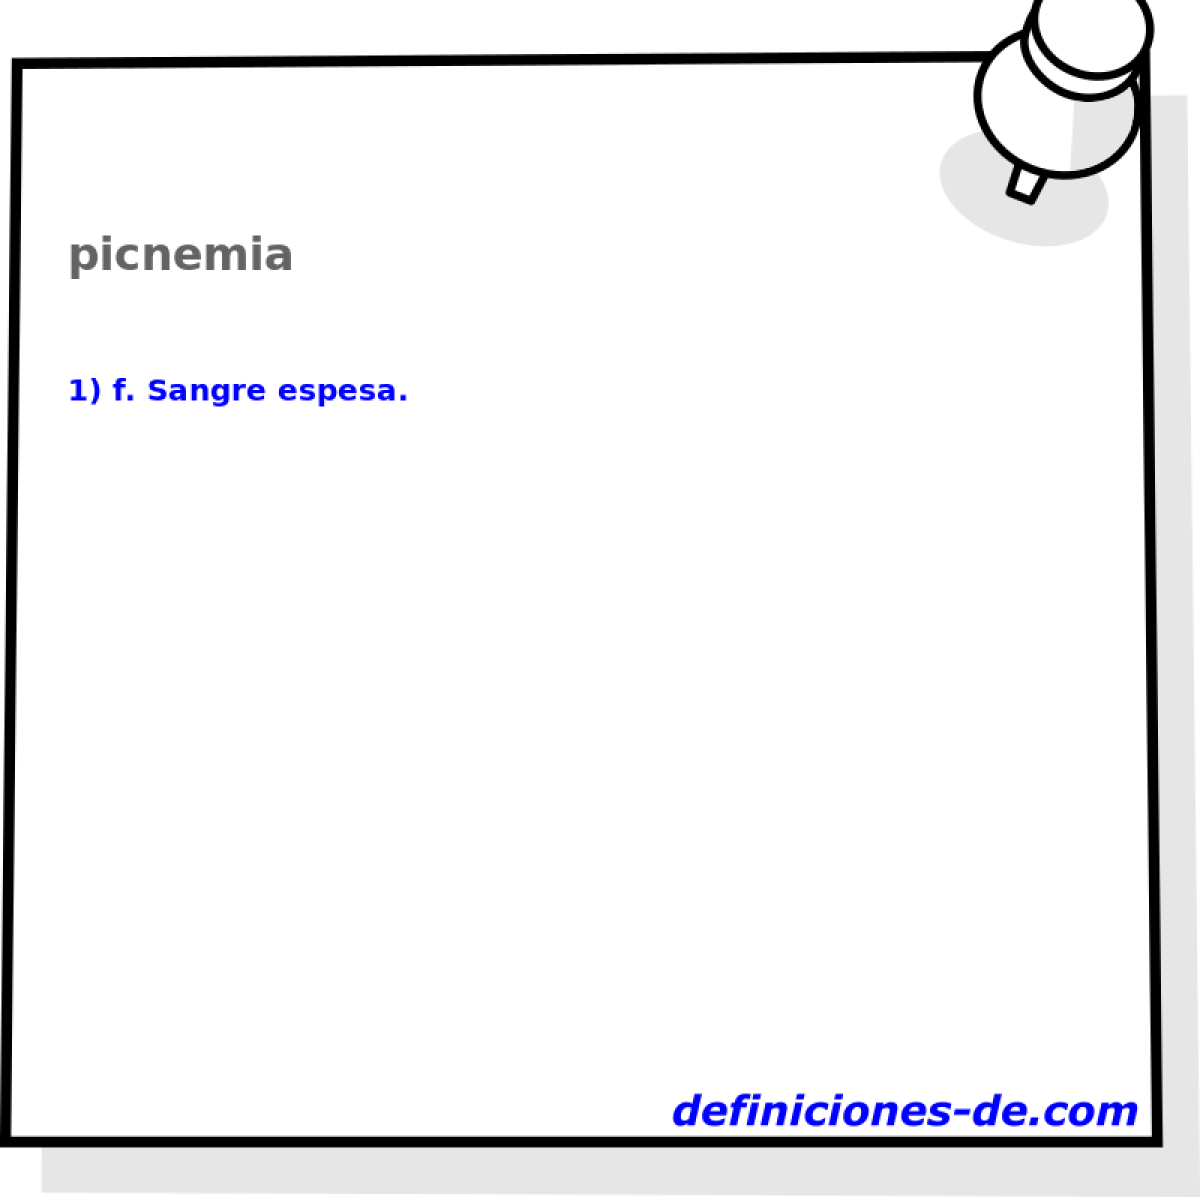 picnemia 